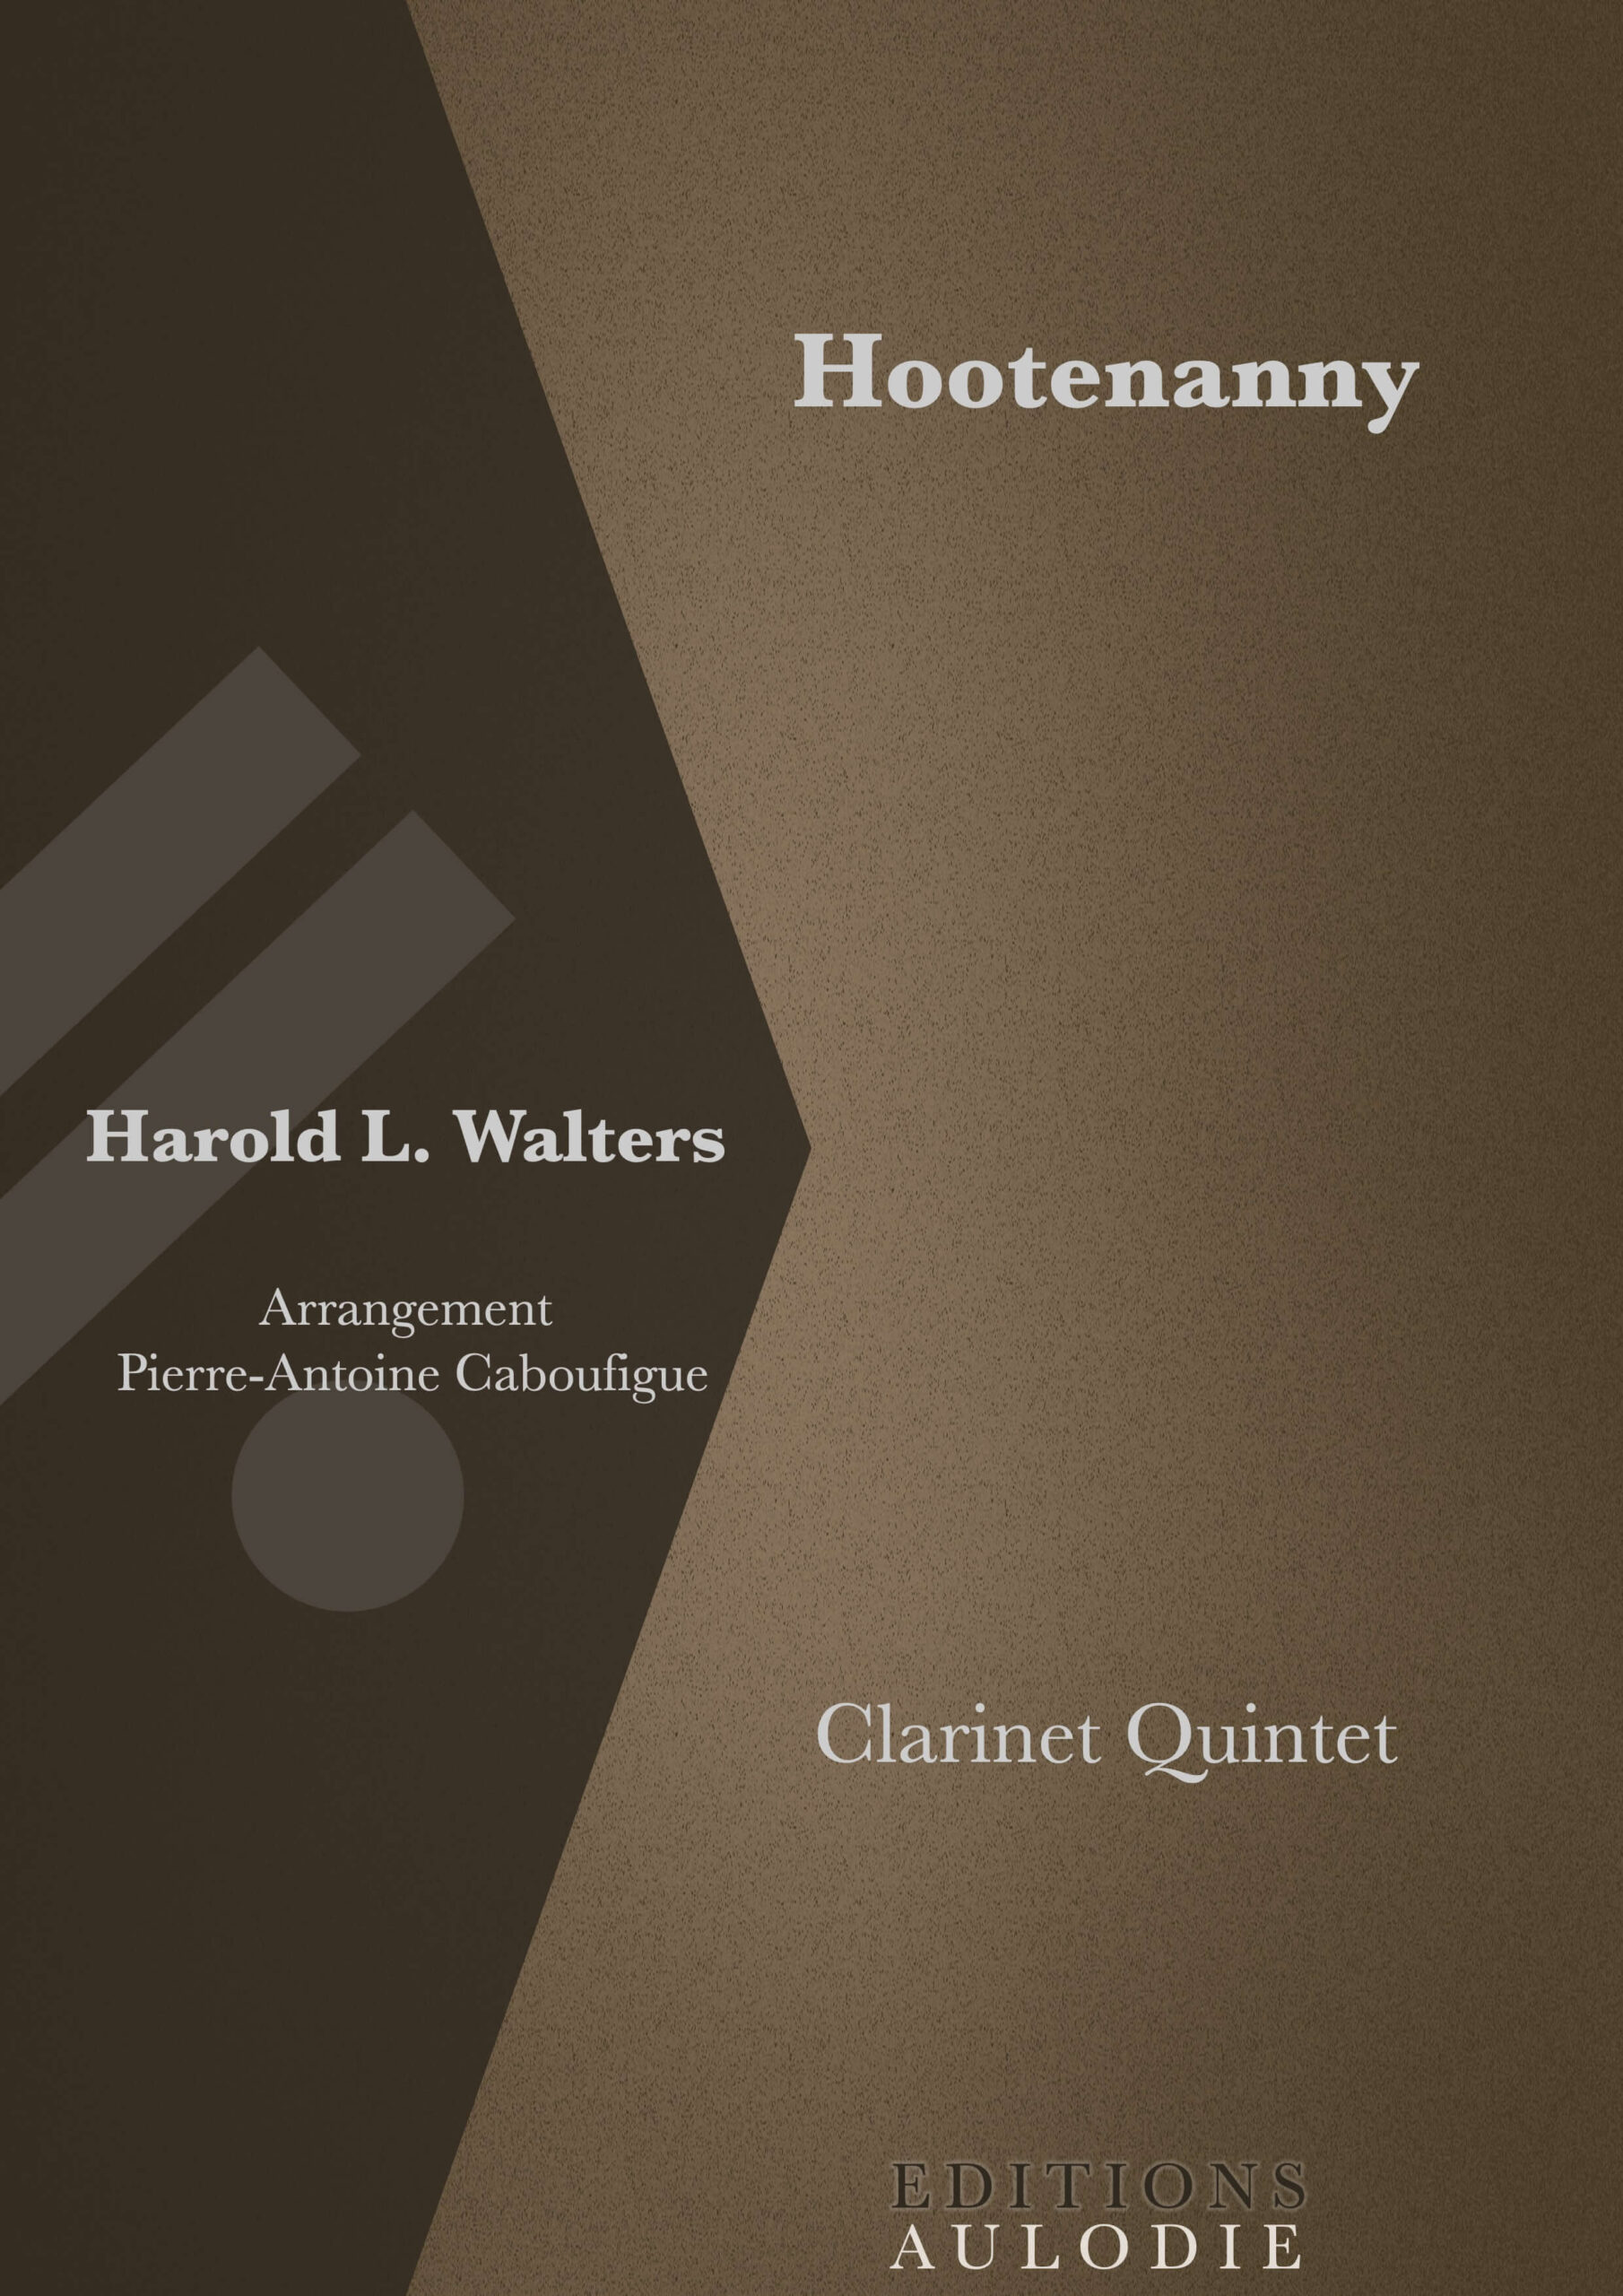 EA01057-Hootenanny-Harold_Laurence_Walters-Quintet